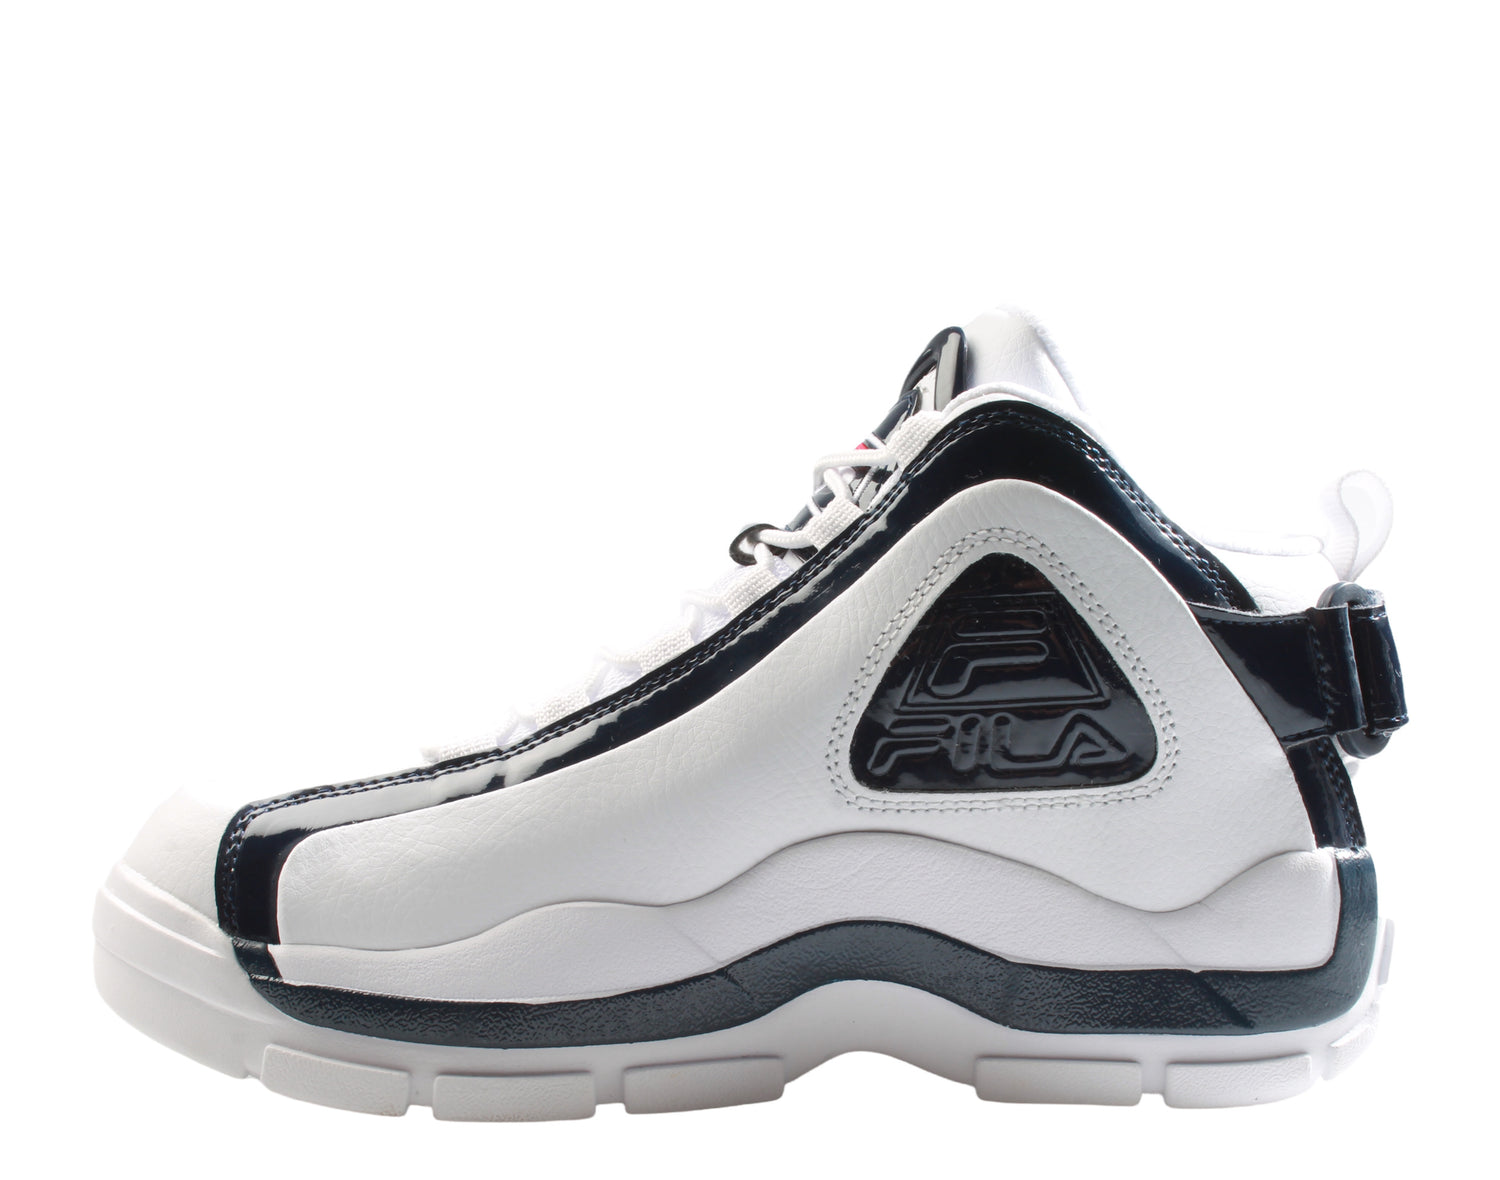 Fila Grant Hill 2 25th Anniversary Edition Men's Basketball Shoes